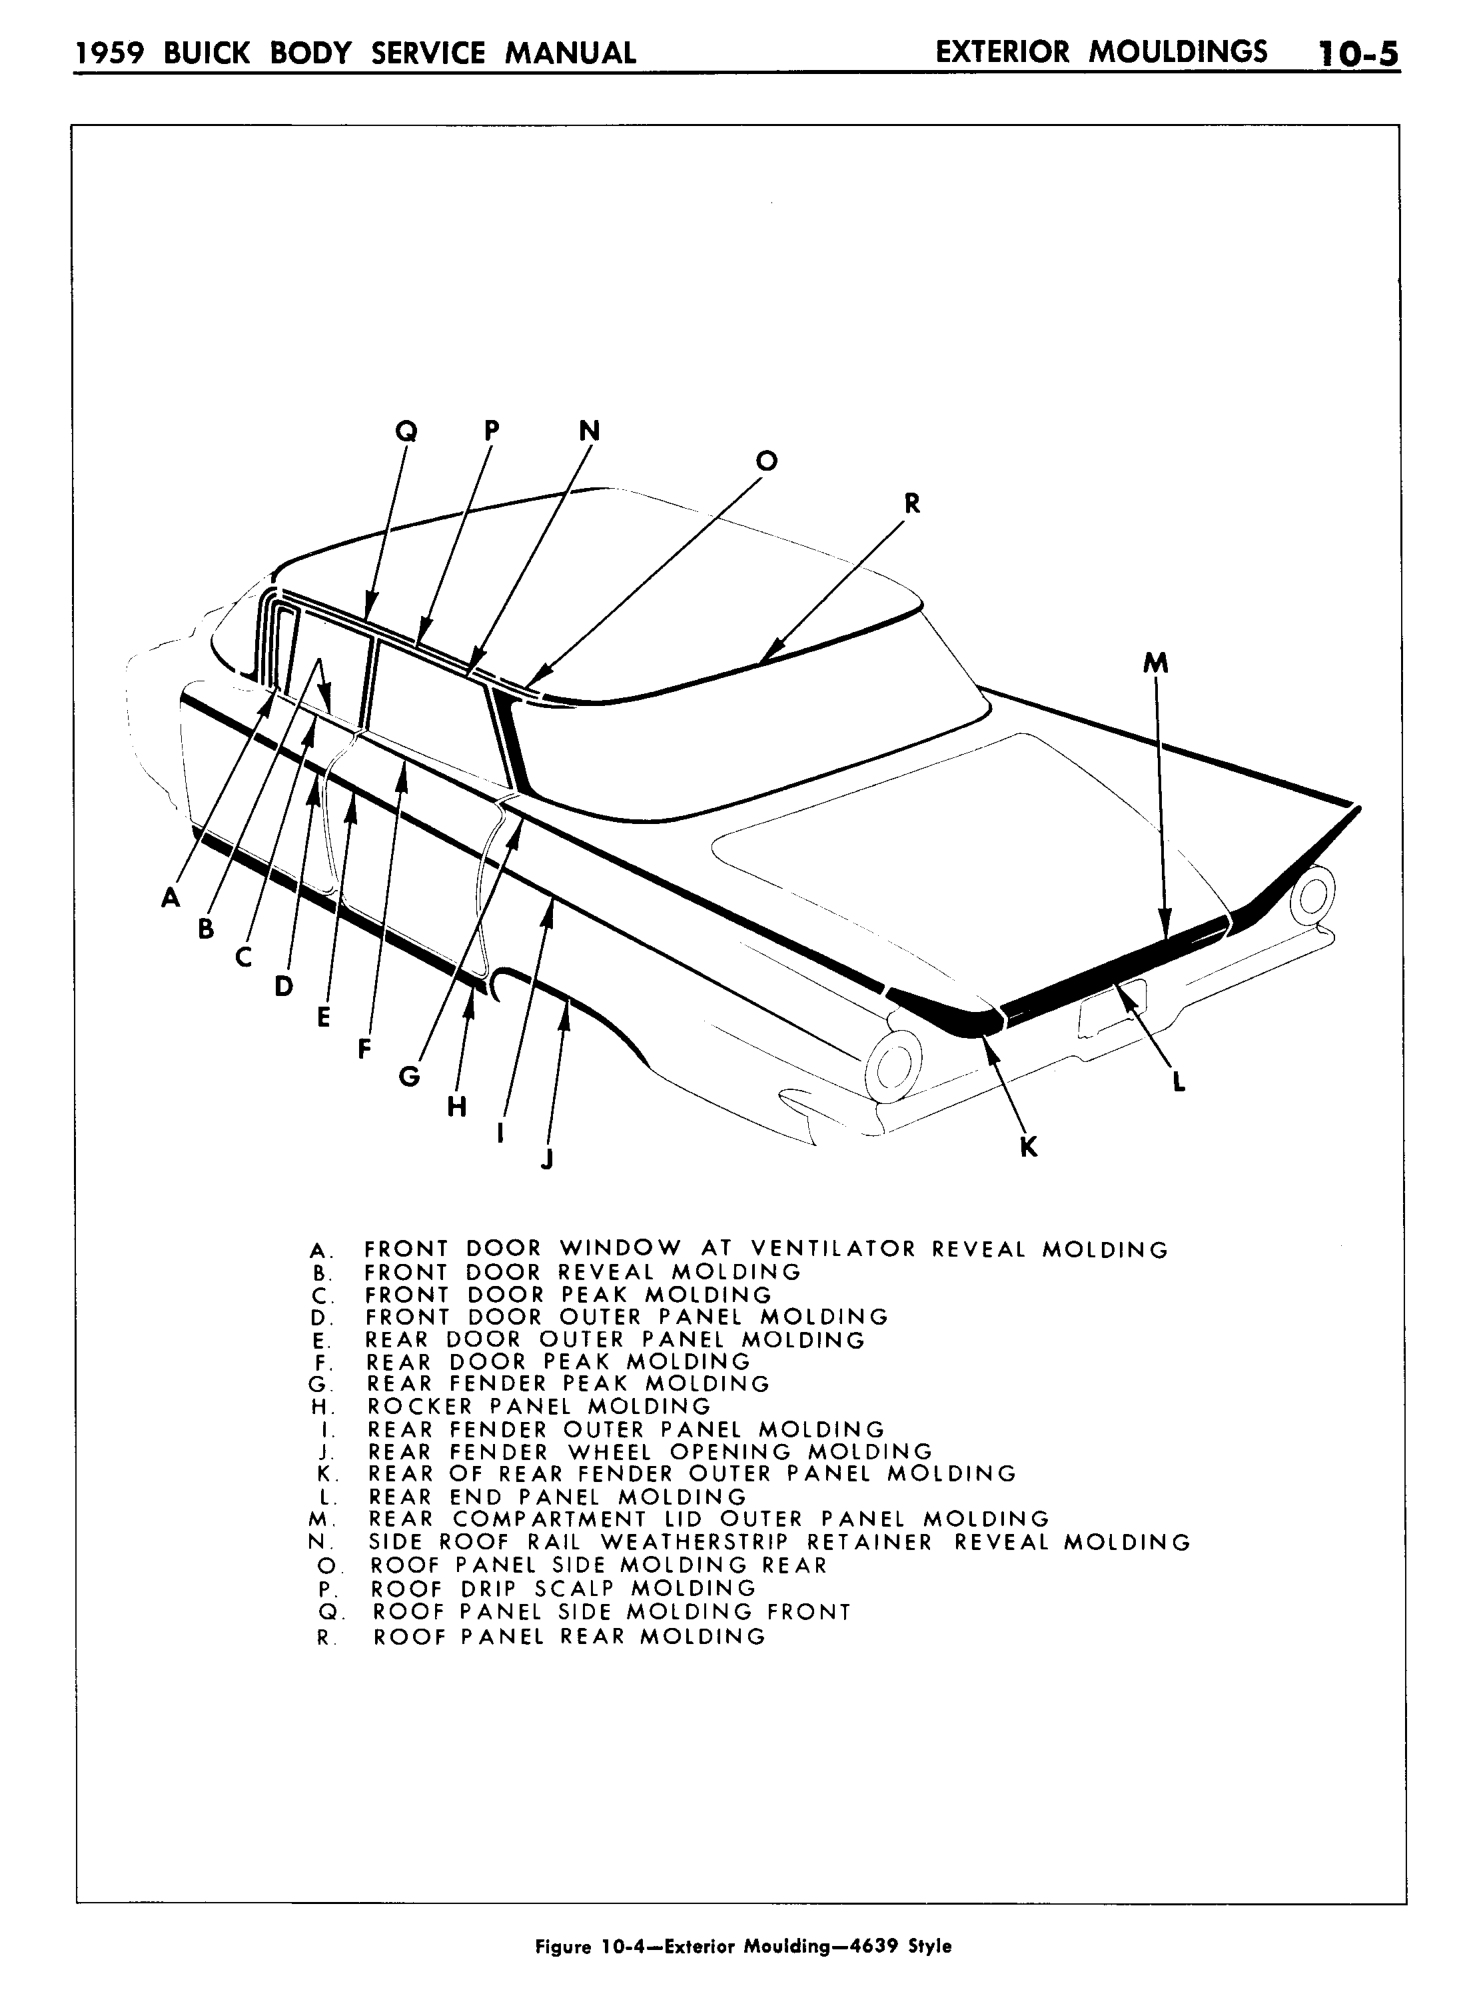 n_11 1959 Buick Body Service-Exterior Moldings_5.jpg